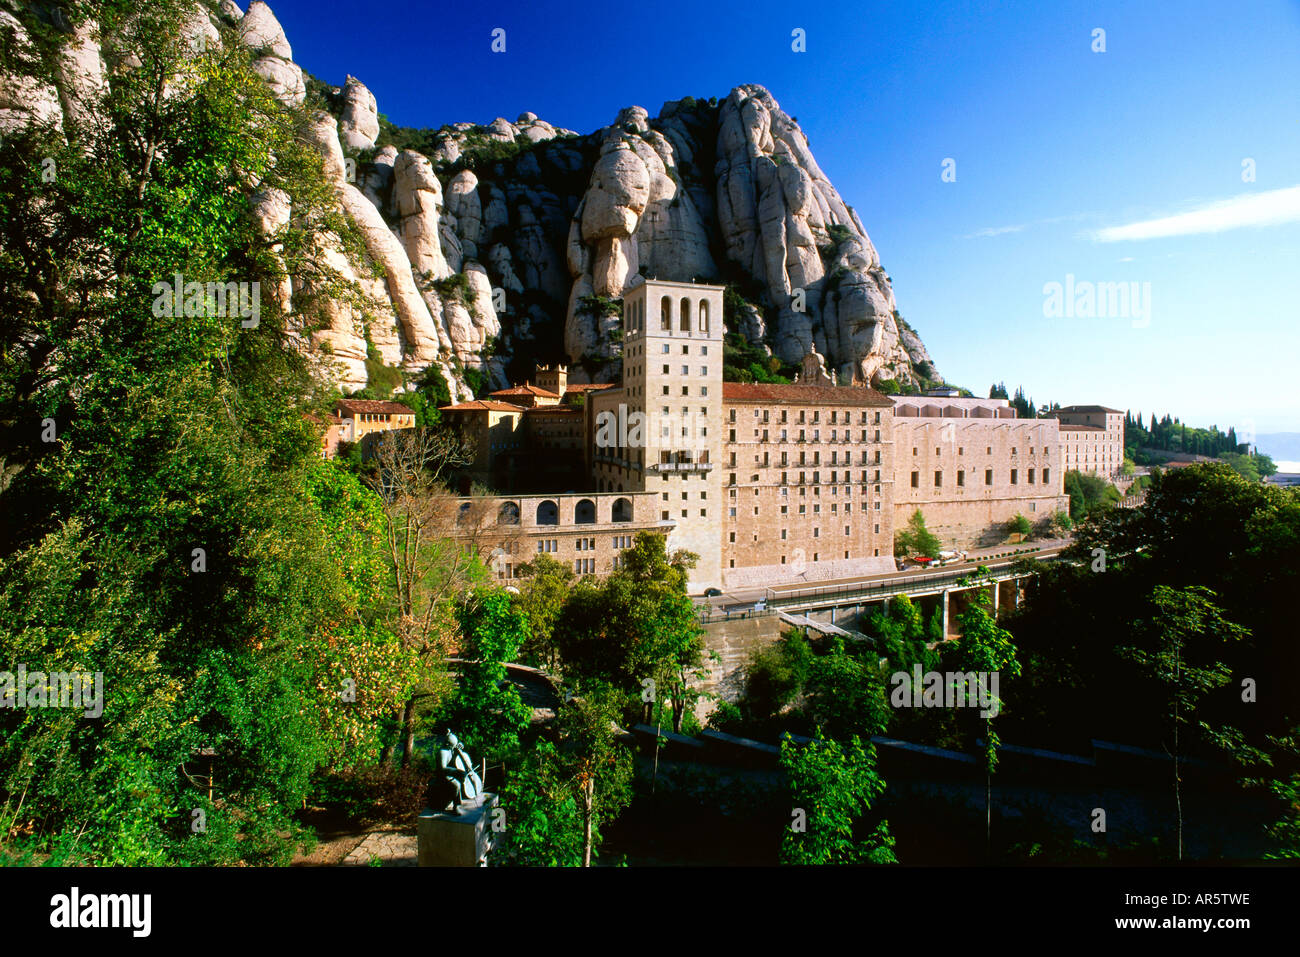 Monasterio De Montserrat High Resolution Stock Photography and Images -  Alamy